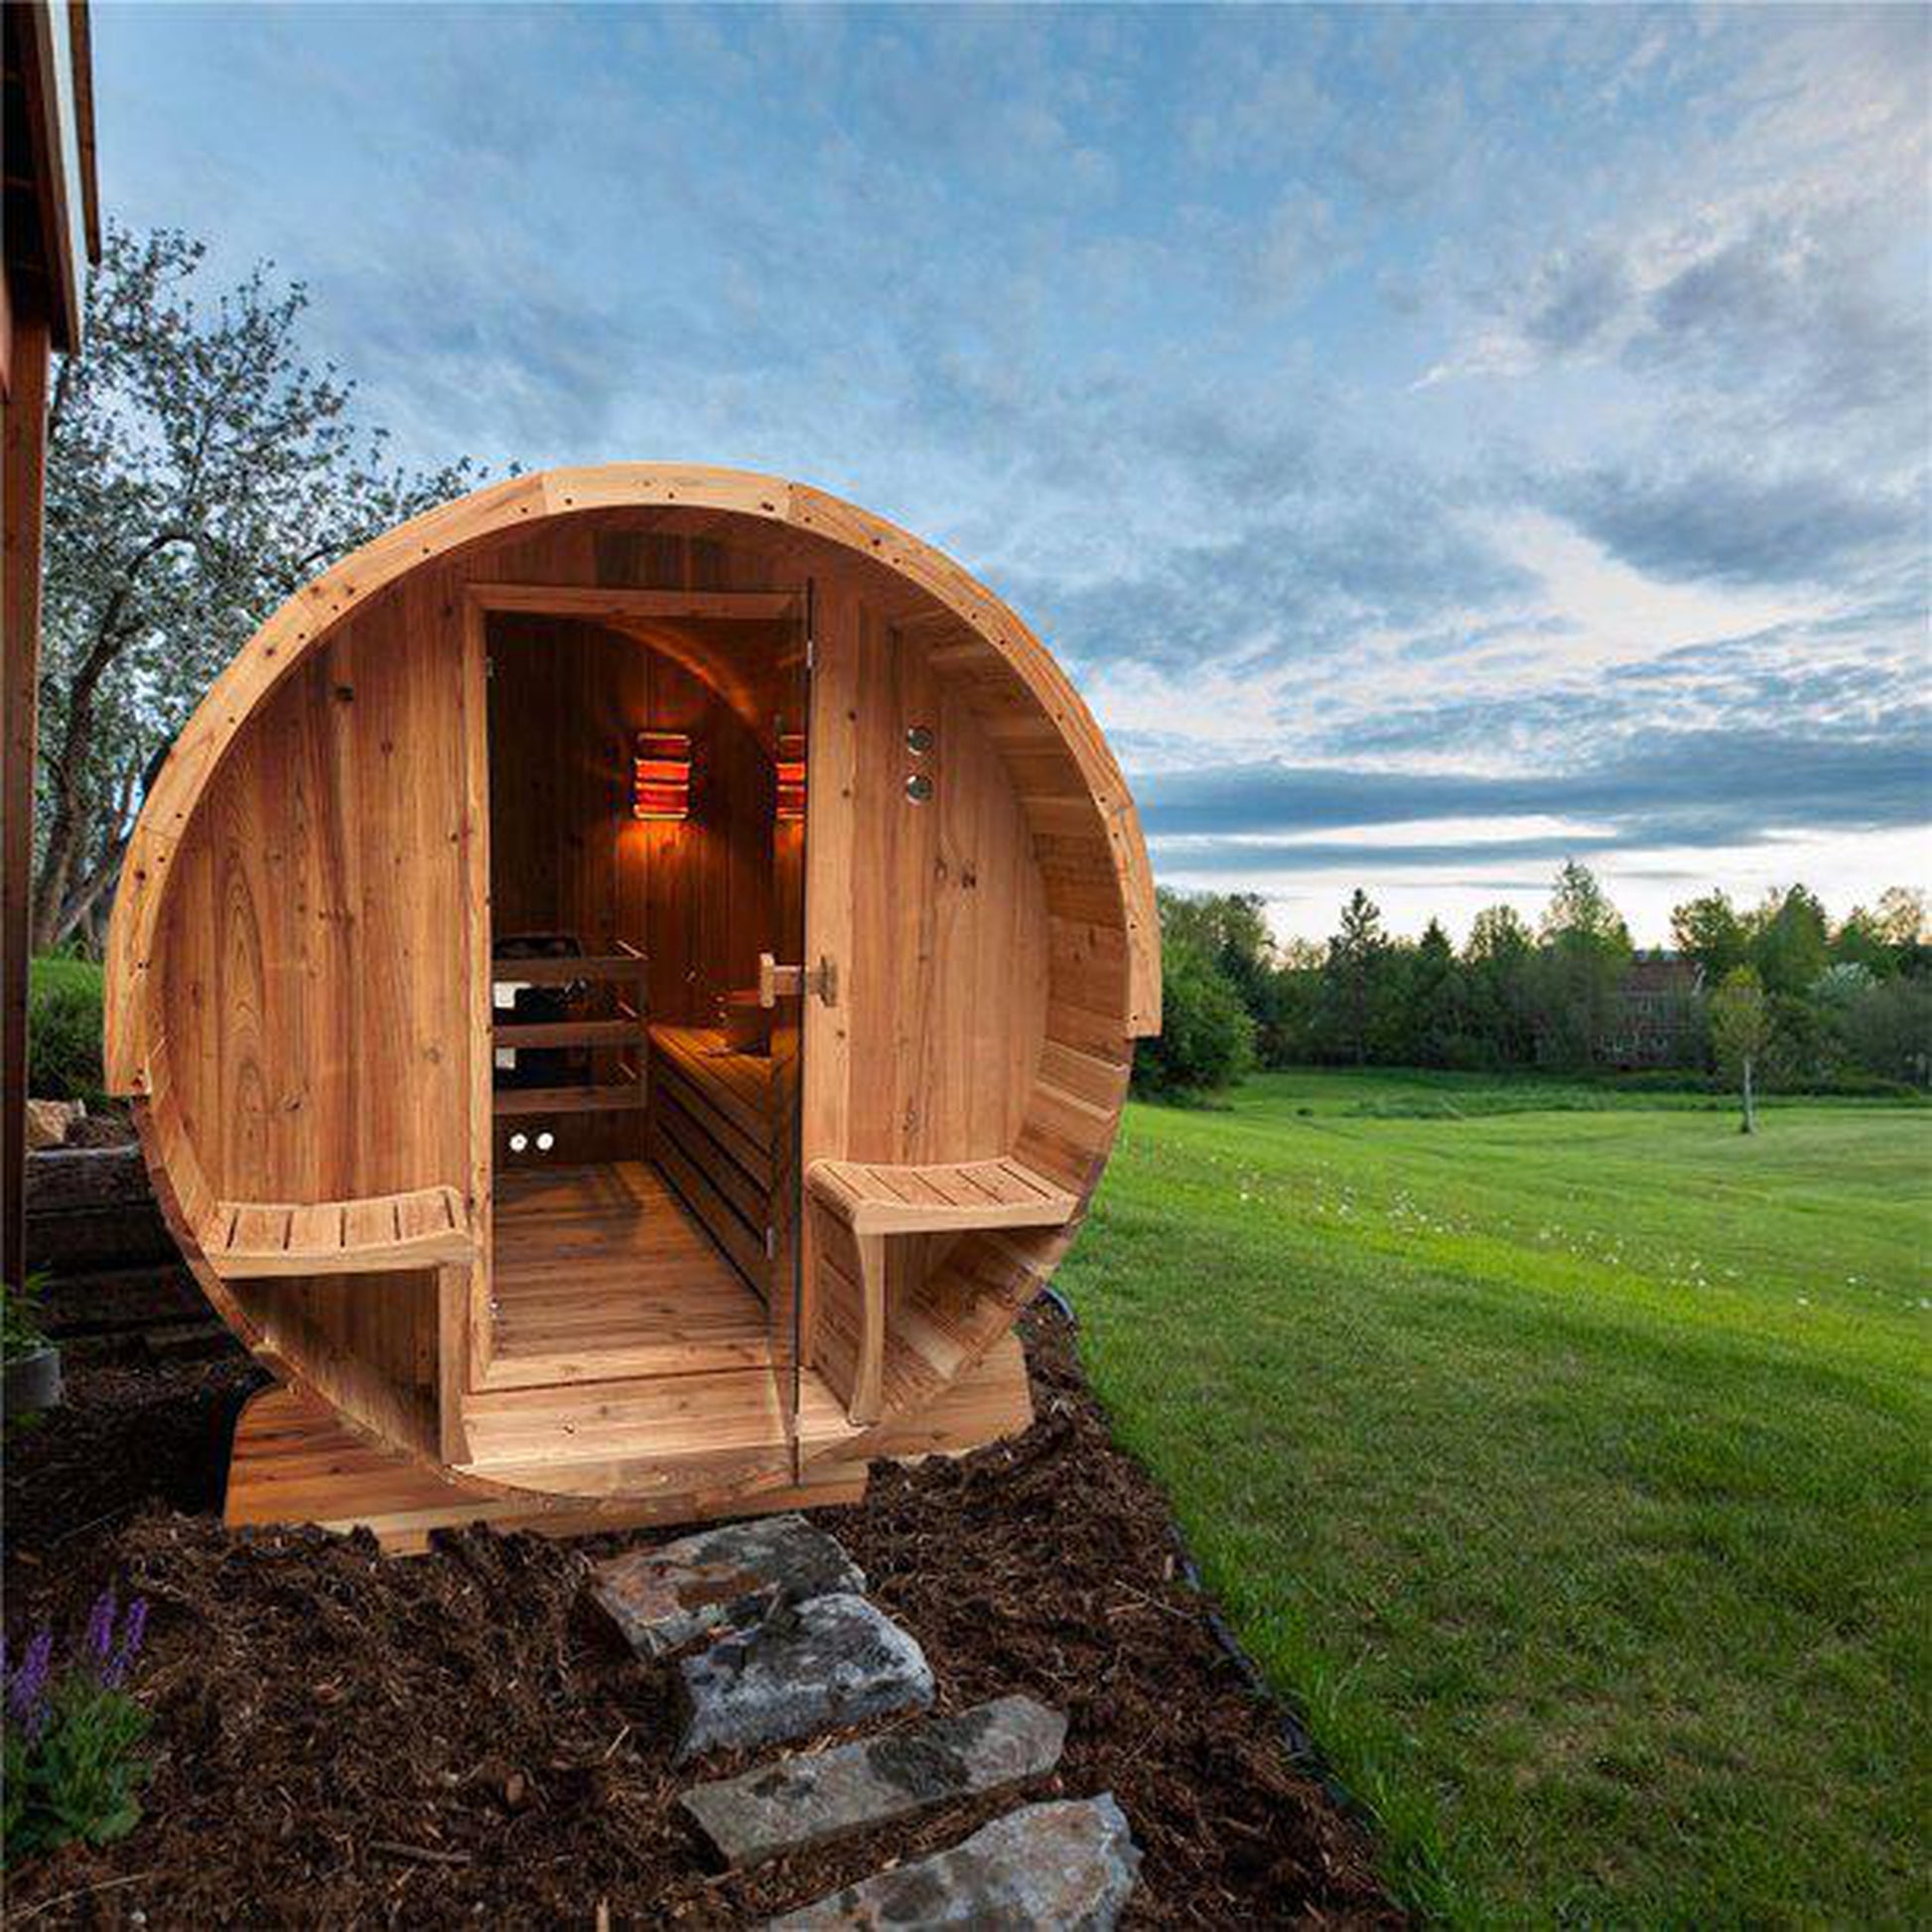 Aleko Rustic Cedar Barrel 6 Person Outdoor Wet Dry Steam Sauna With 6 kW Harvia KIP Electric Sauna Heater and Bitumen Shingle Roof